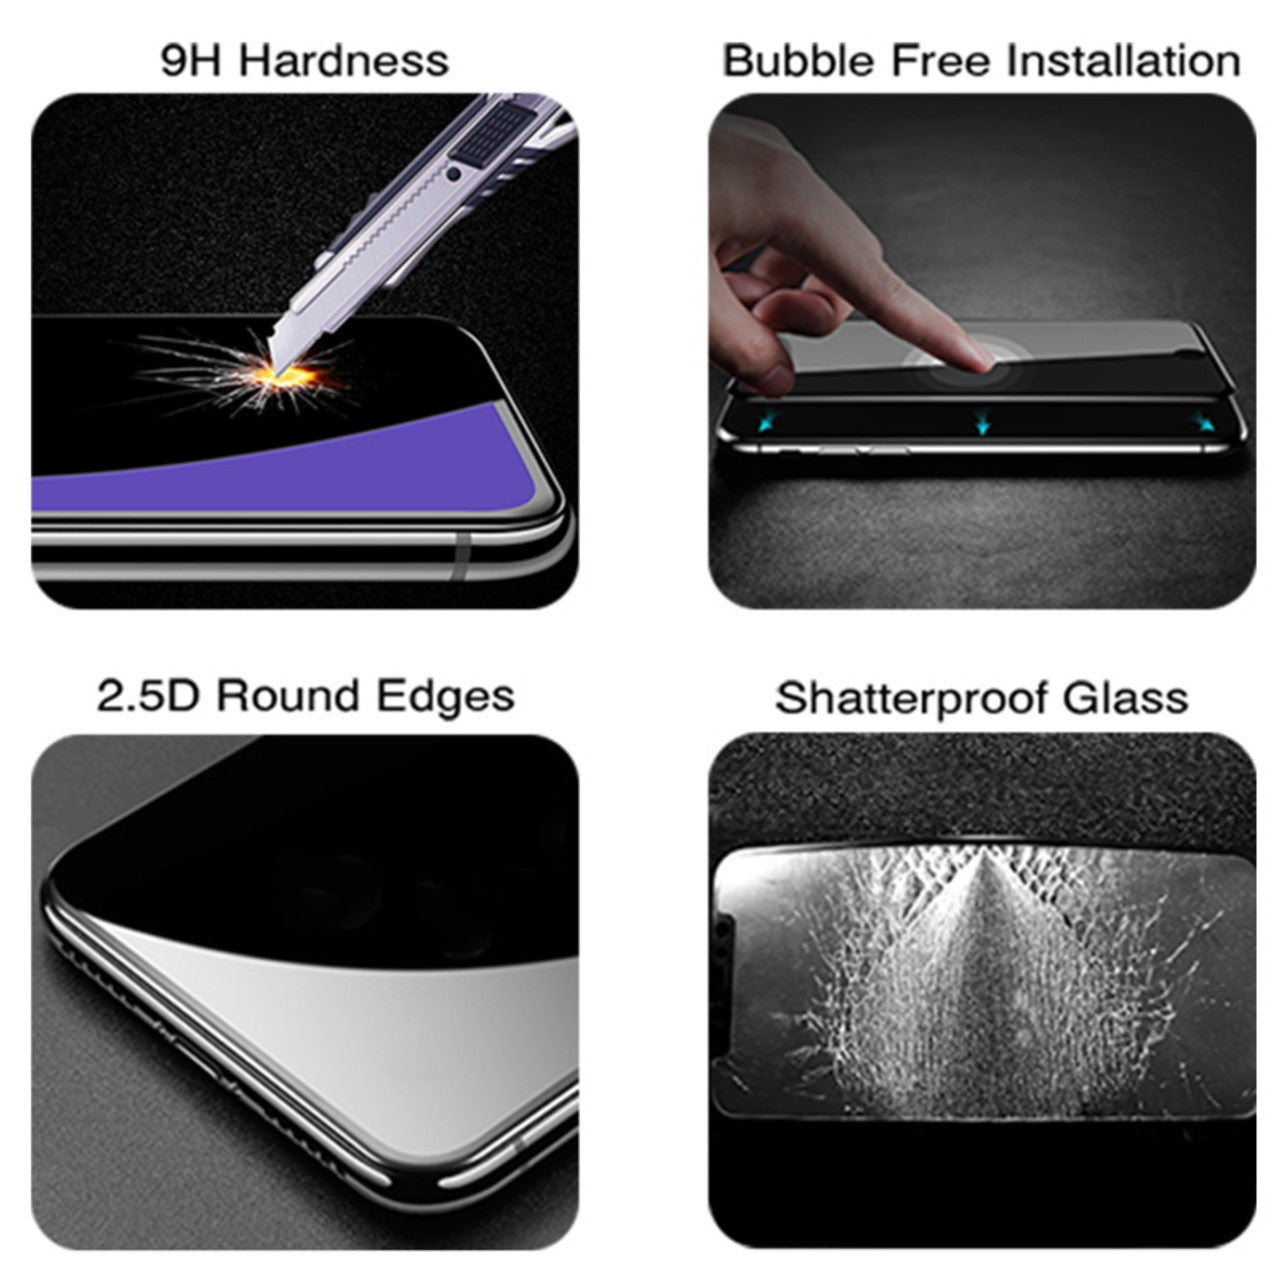 MyBat iPhone 13 Pro Max Clear Vidrio Templado - MyBat iPhone 13 Pro Max Clear Tempered Glass